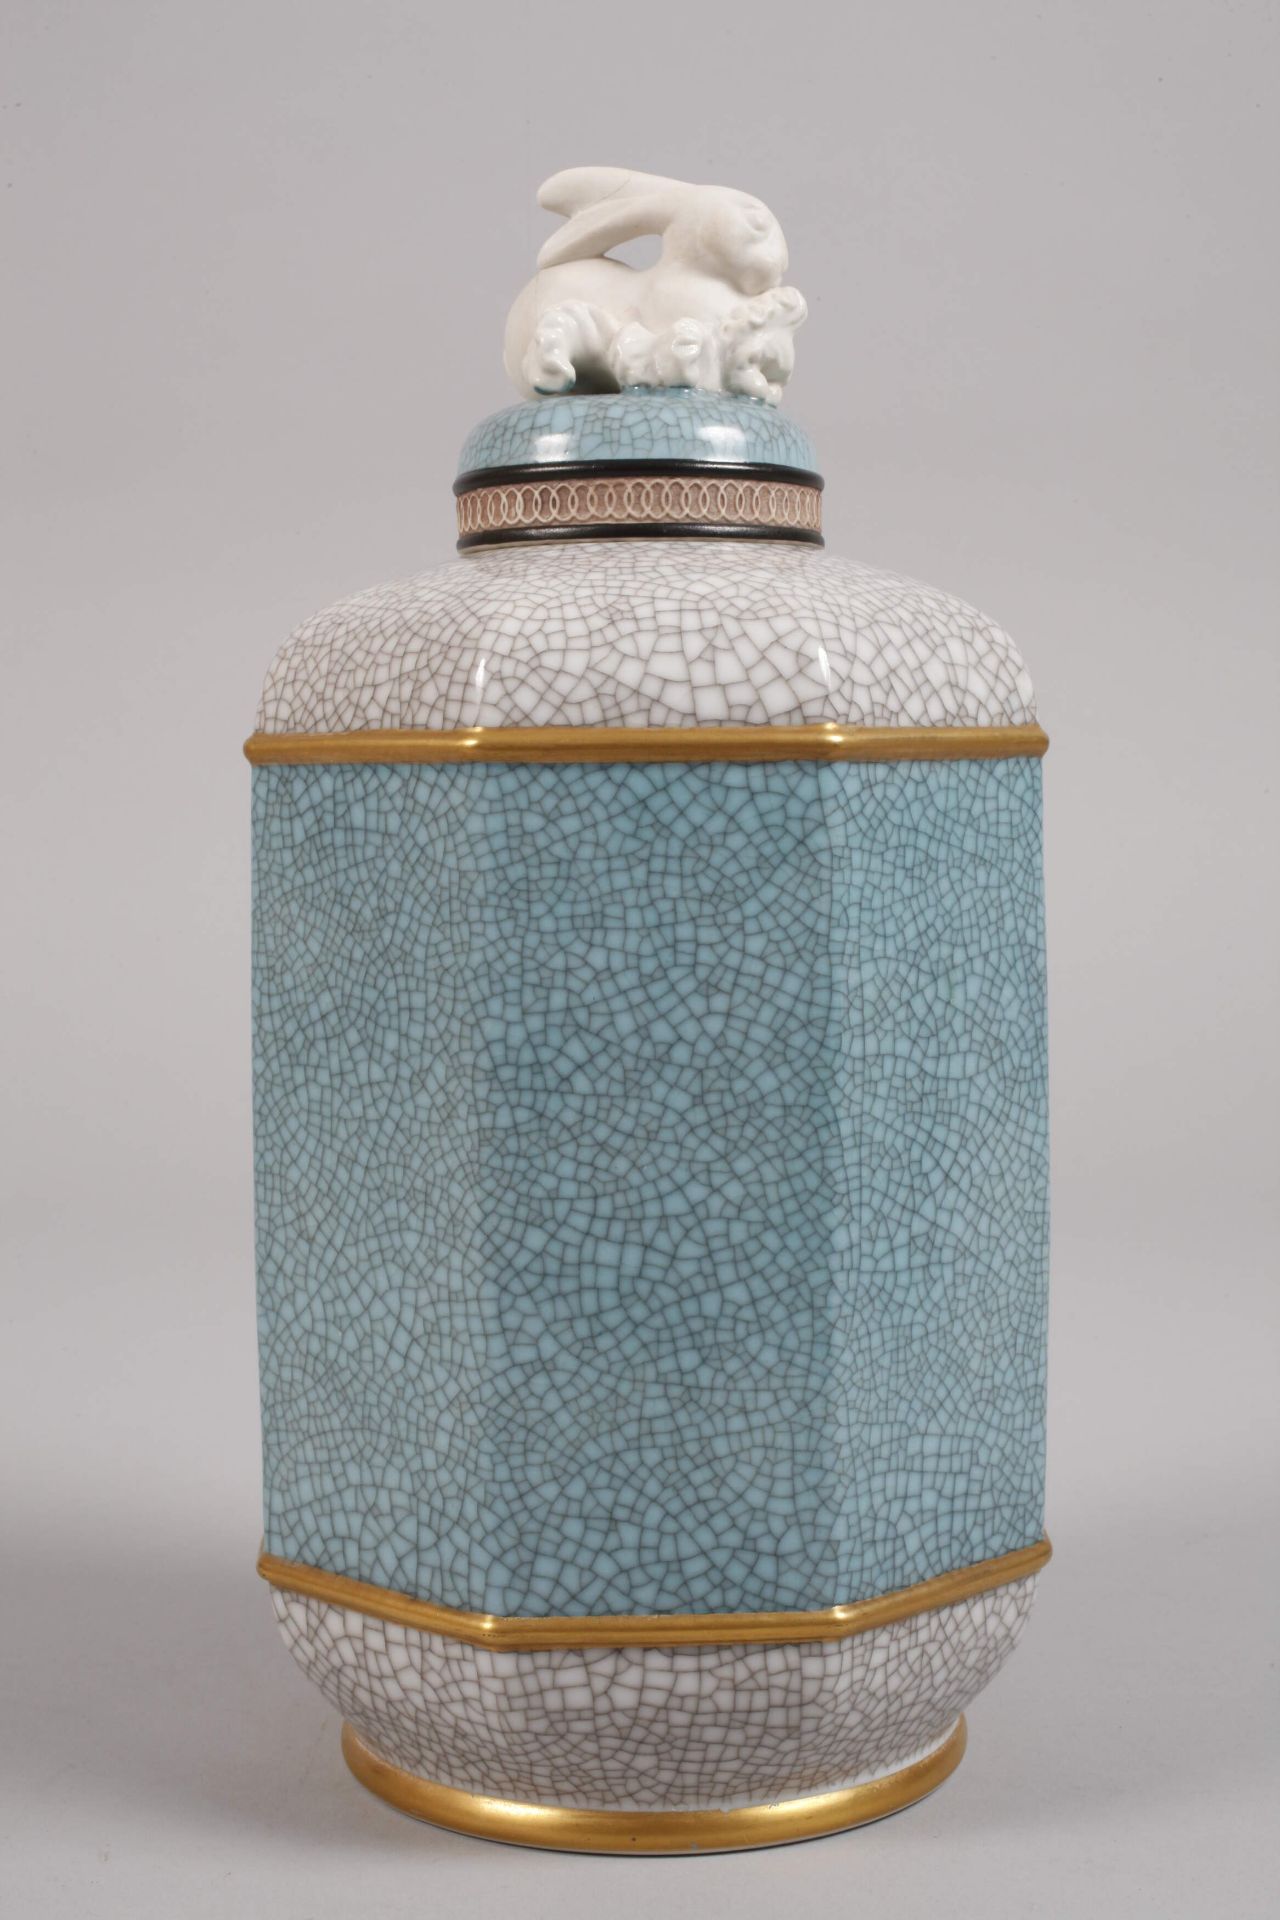 Copenhagen lidded urn with rabbit knob - Image 3 of 4